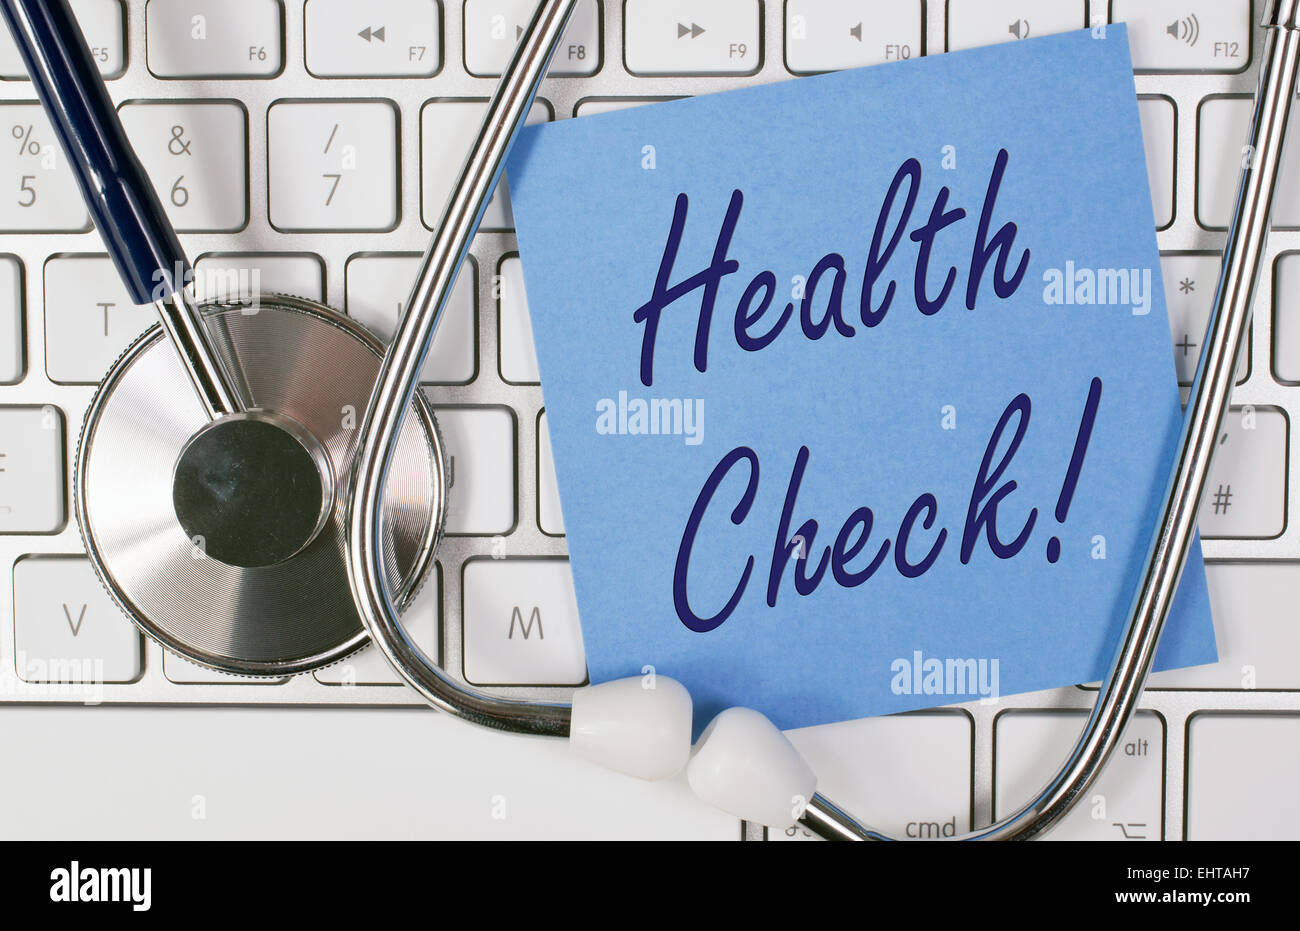 Health Check Stock Photo